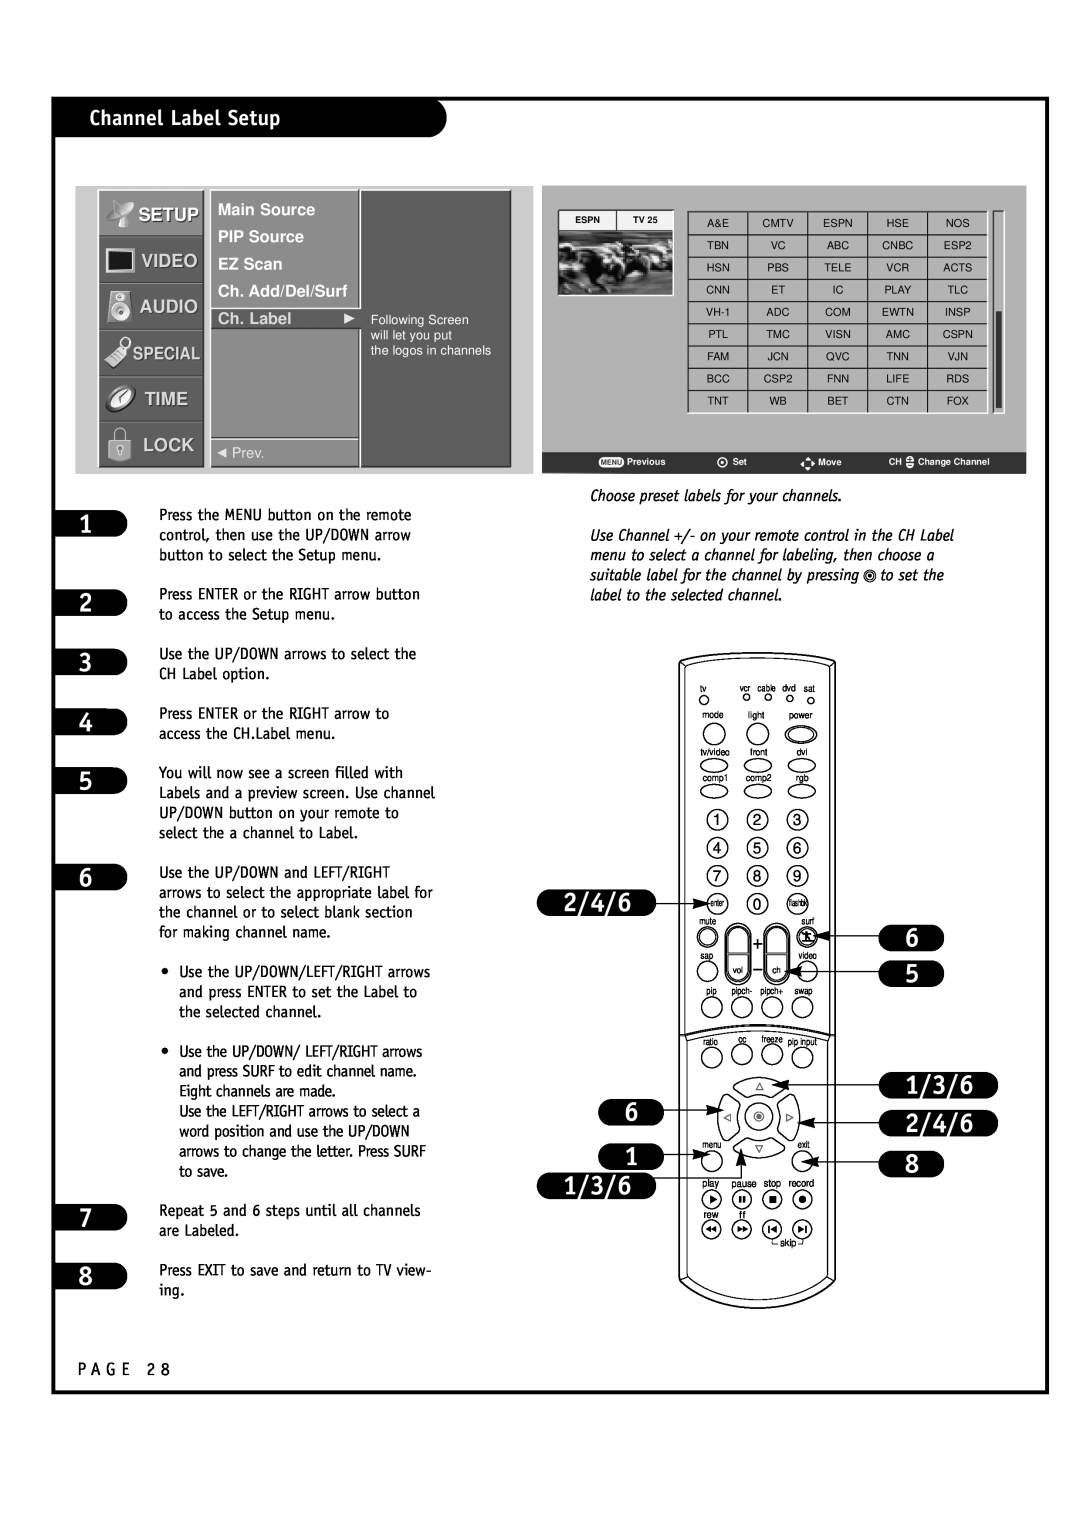 LG Electronics RU-60SZ30, RU-52SZ30 owner manual 2/4/6, 1/3/6, Channel Label Setup, Video Audio Special Time Lock, Ch. Label 